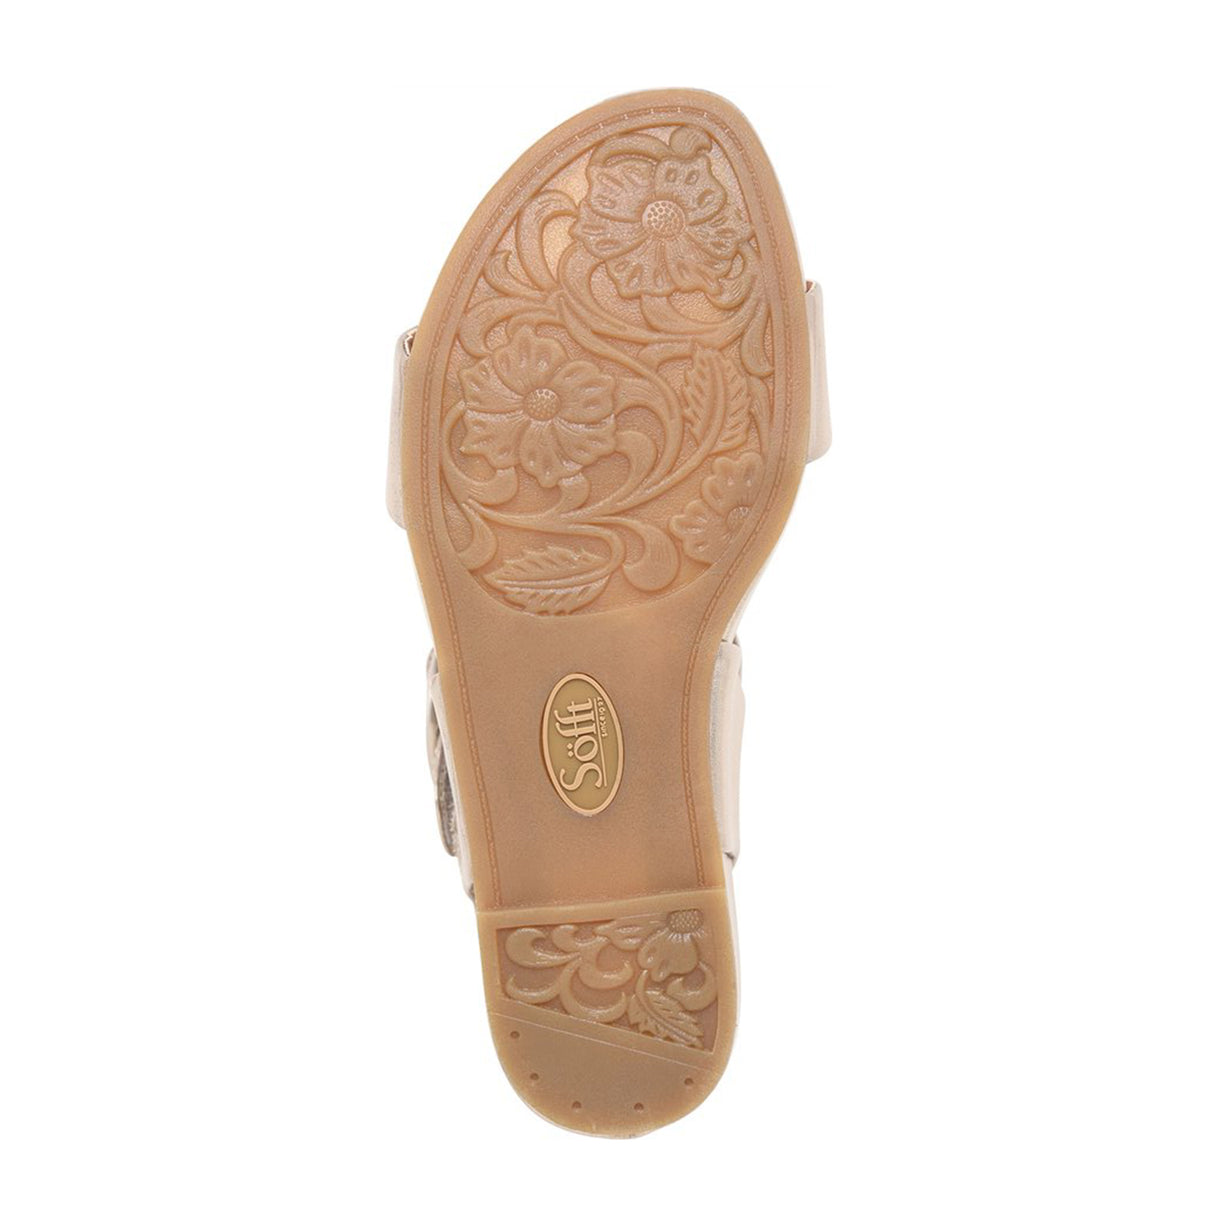 Sofft Vaya Wedge Sandal (Women) - Gold Sandals - Heel/Wedge - The Heel Shoe Fitters